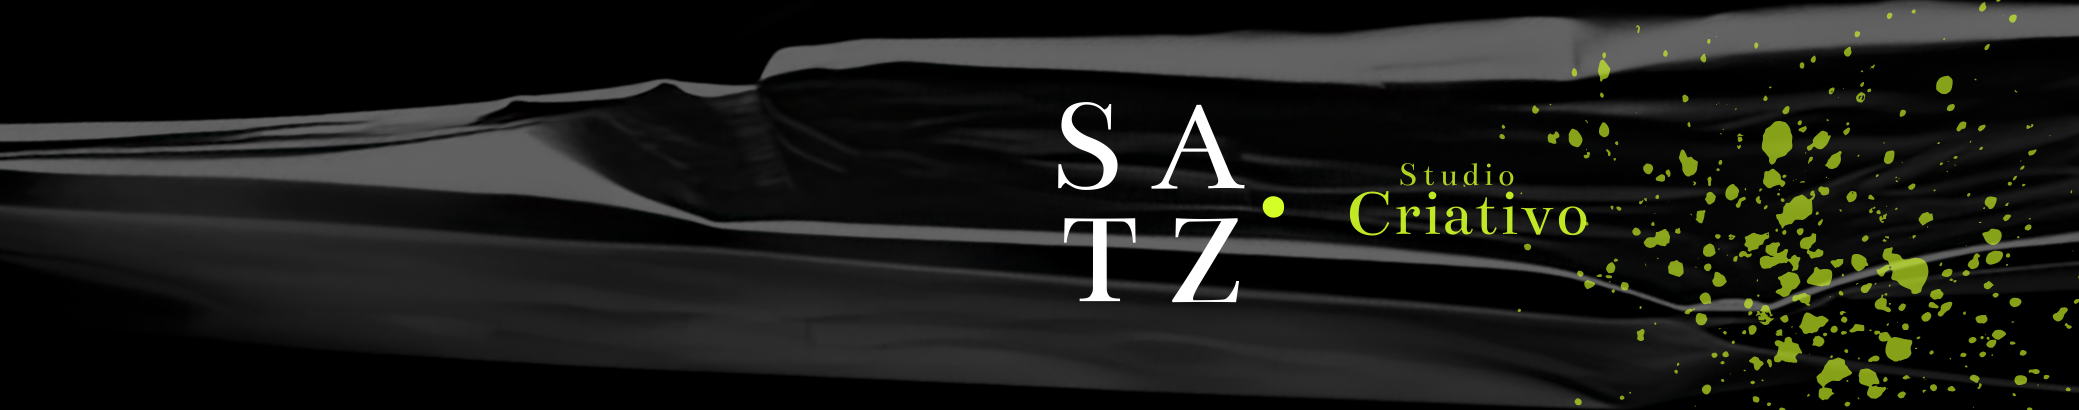 SATZ Studio Criativo's profile banner